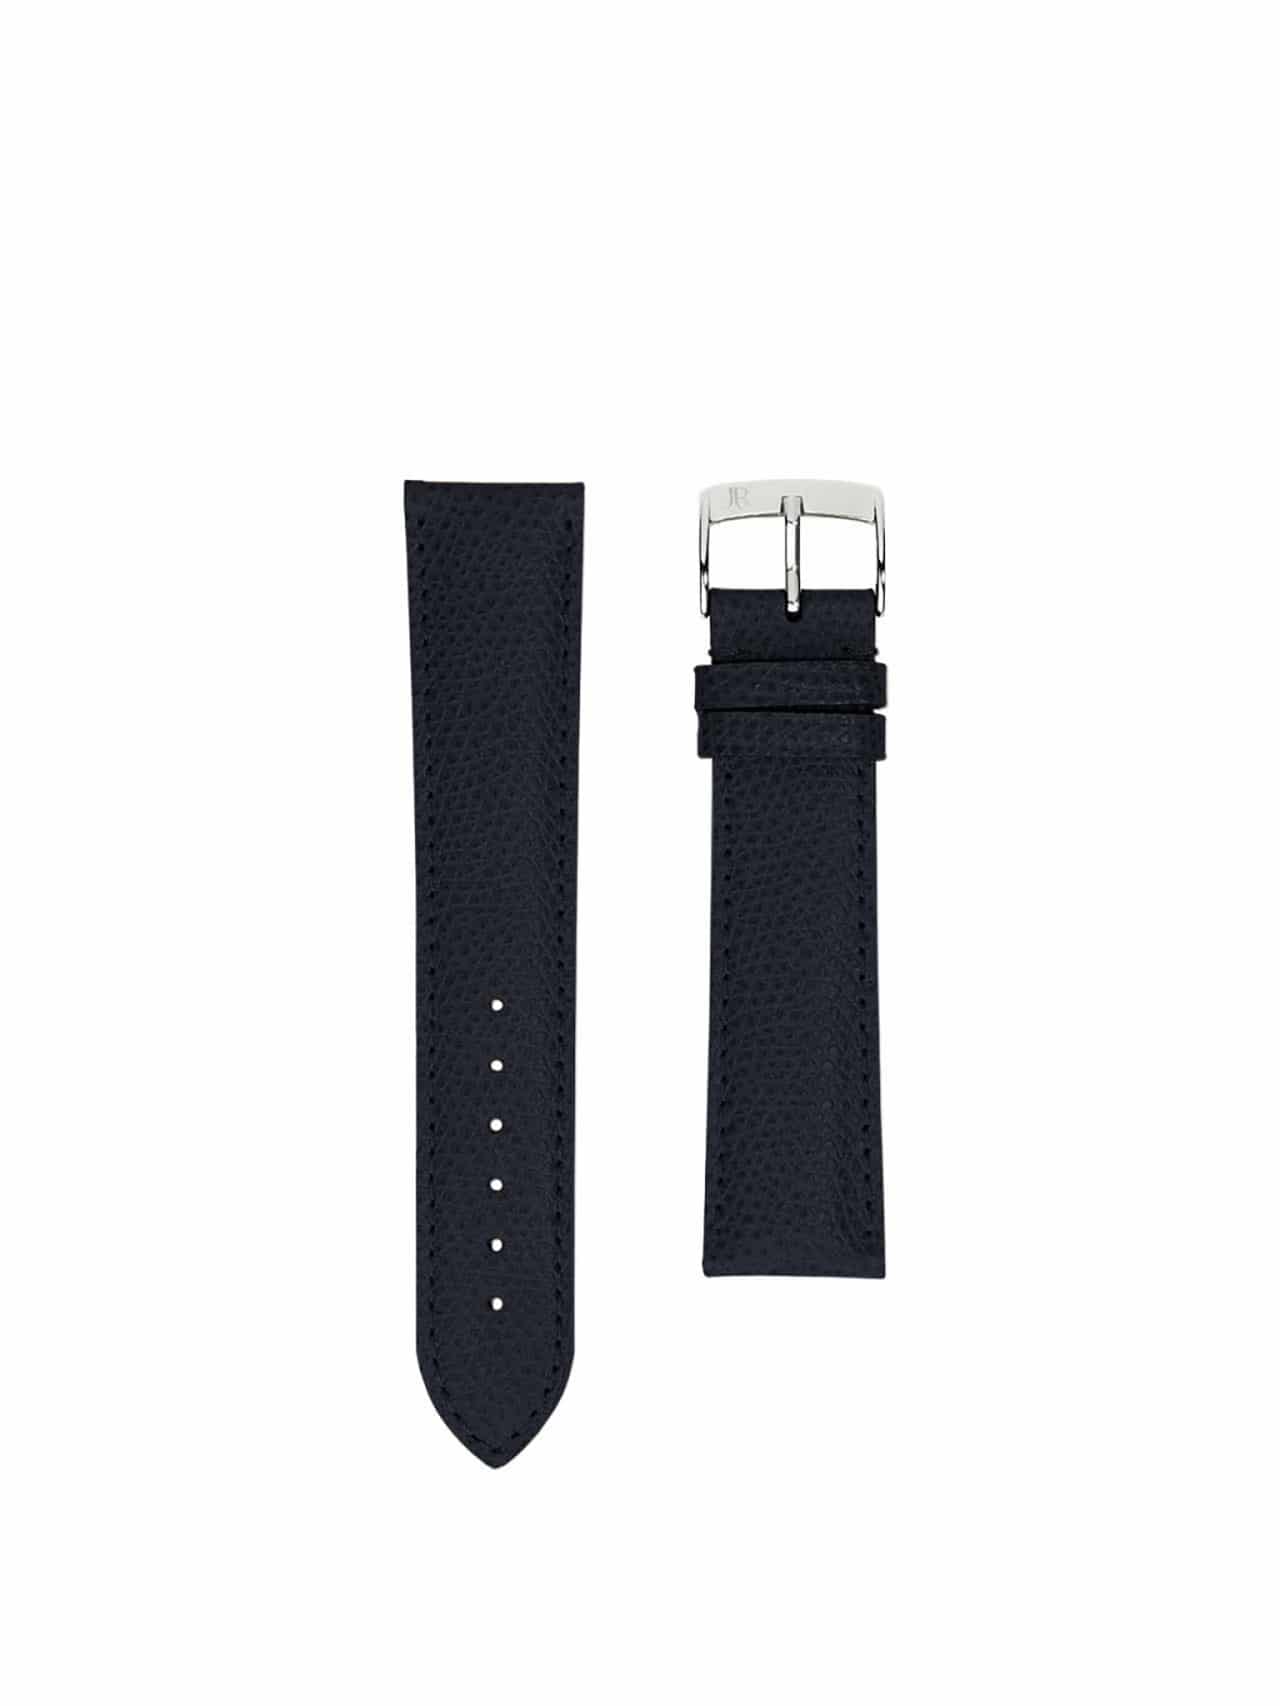 jean rousseau watch straps leather rubber black